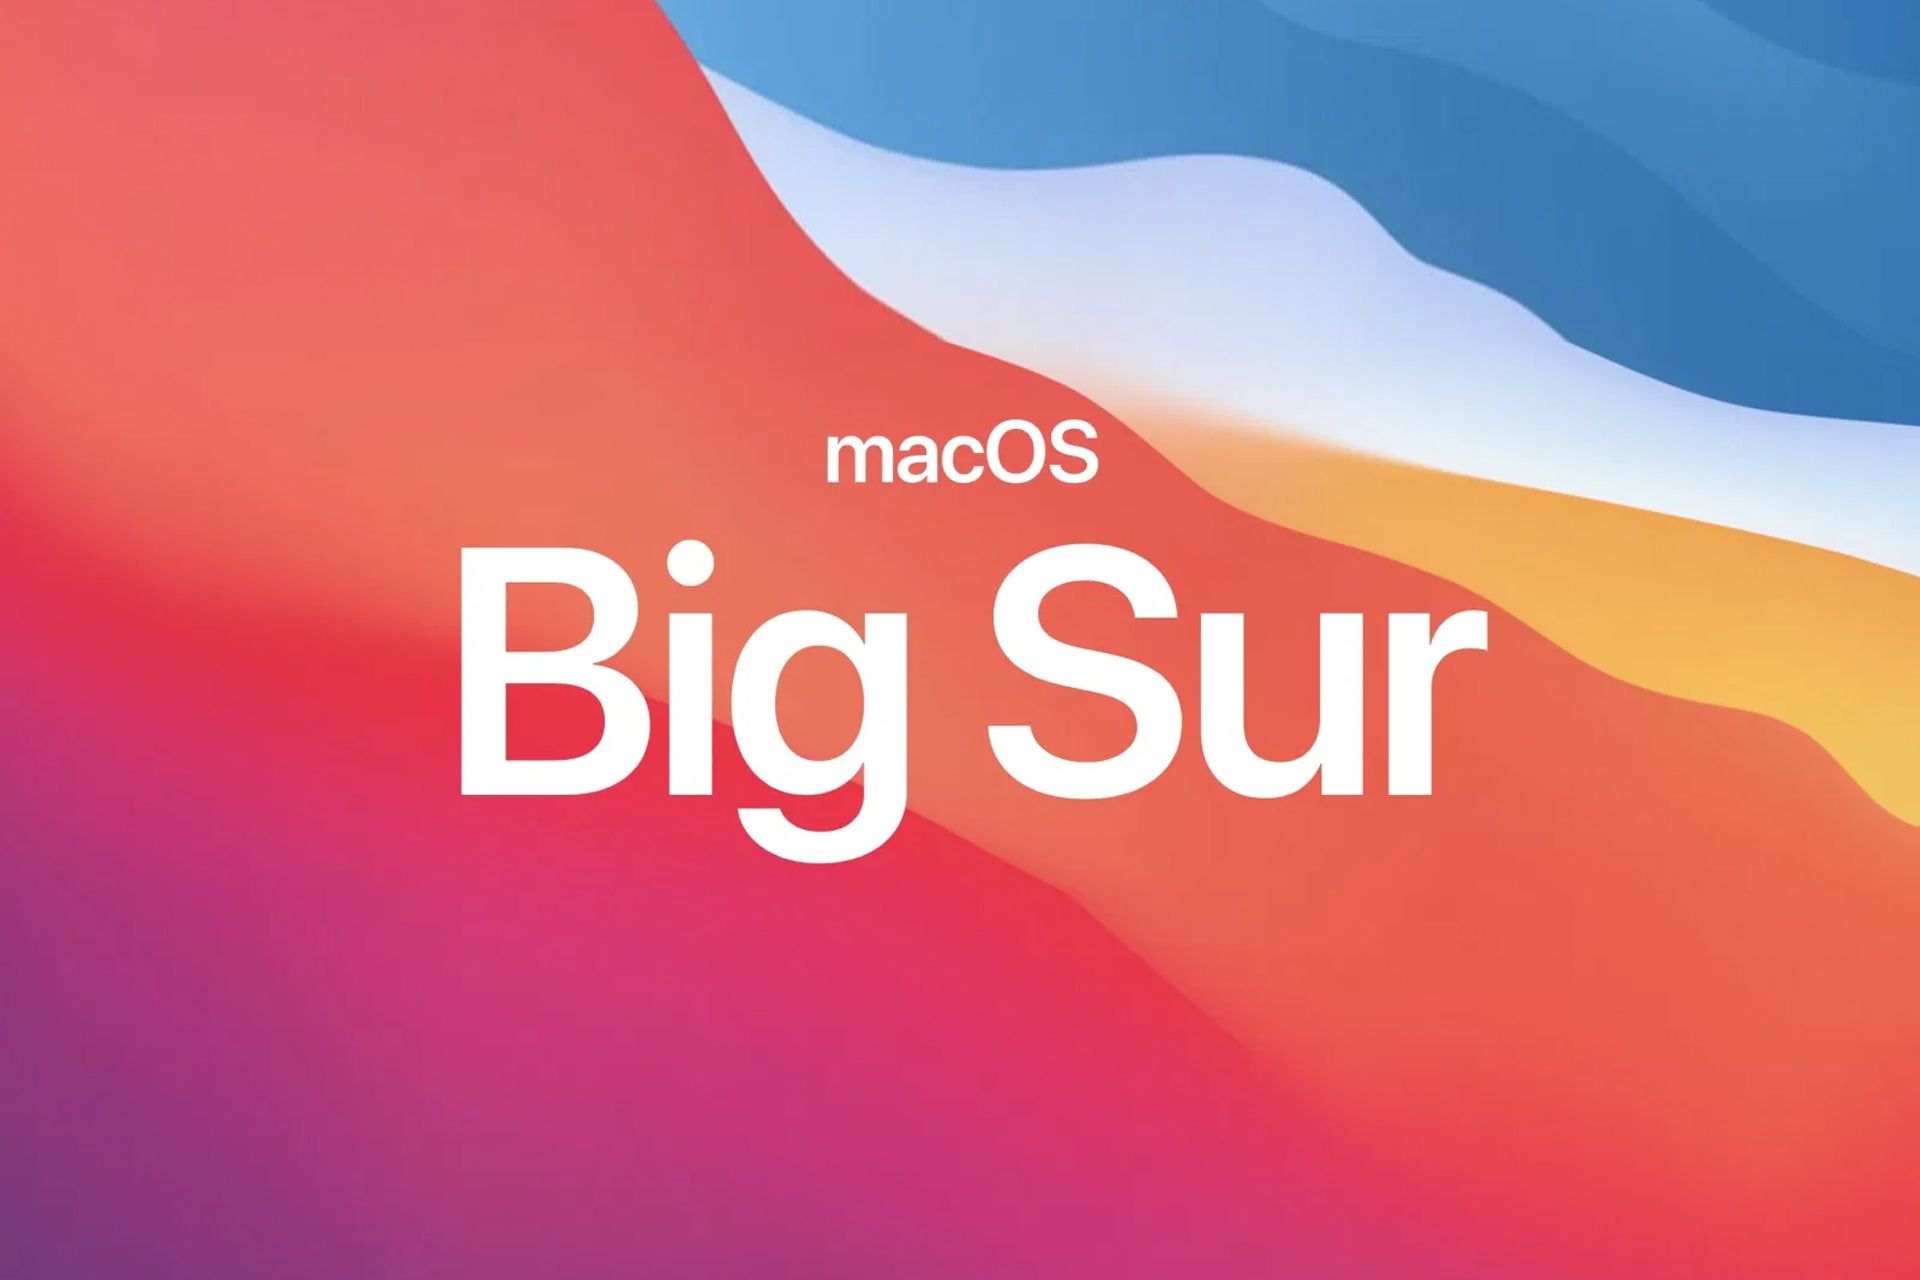 لوگو مک او اس بیگ سر / Apple macOS Big Sur اپل